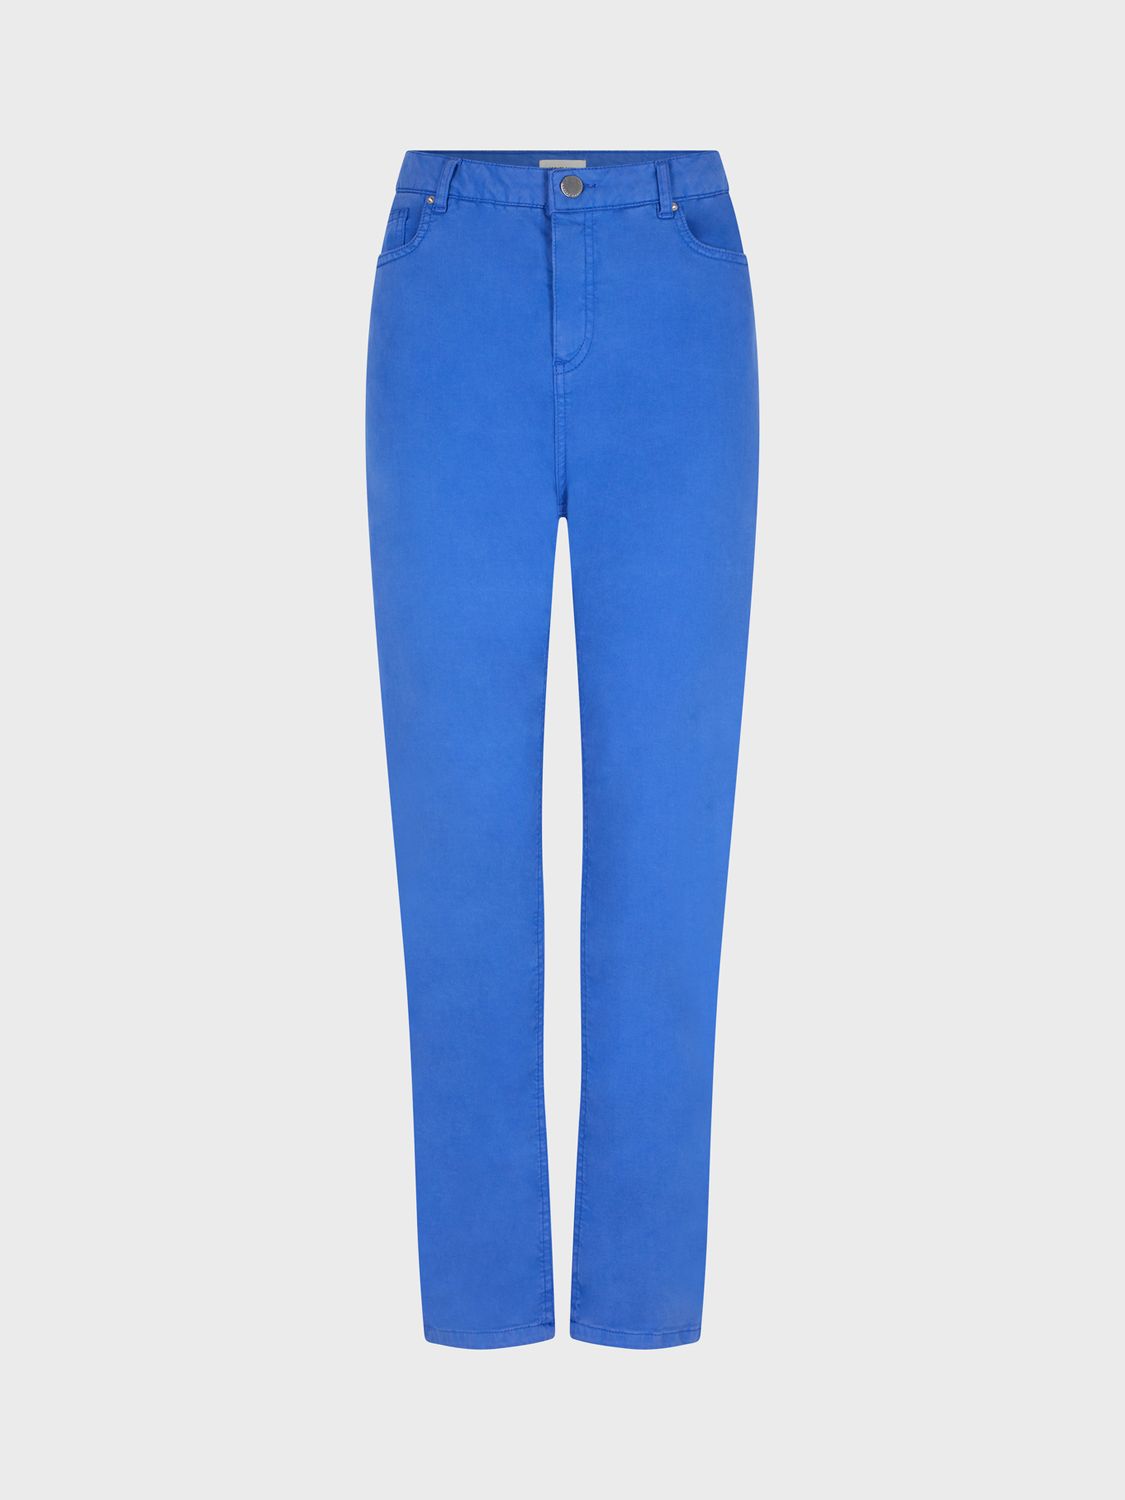 Gerard Darel Carli Cotton Blend Jeans, Blue, 10